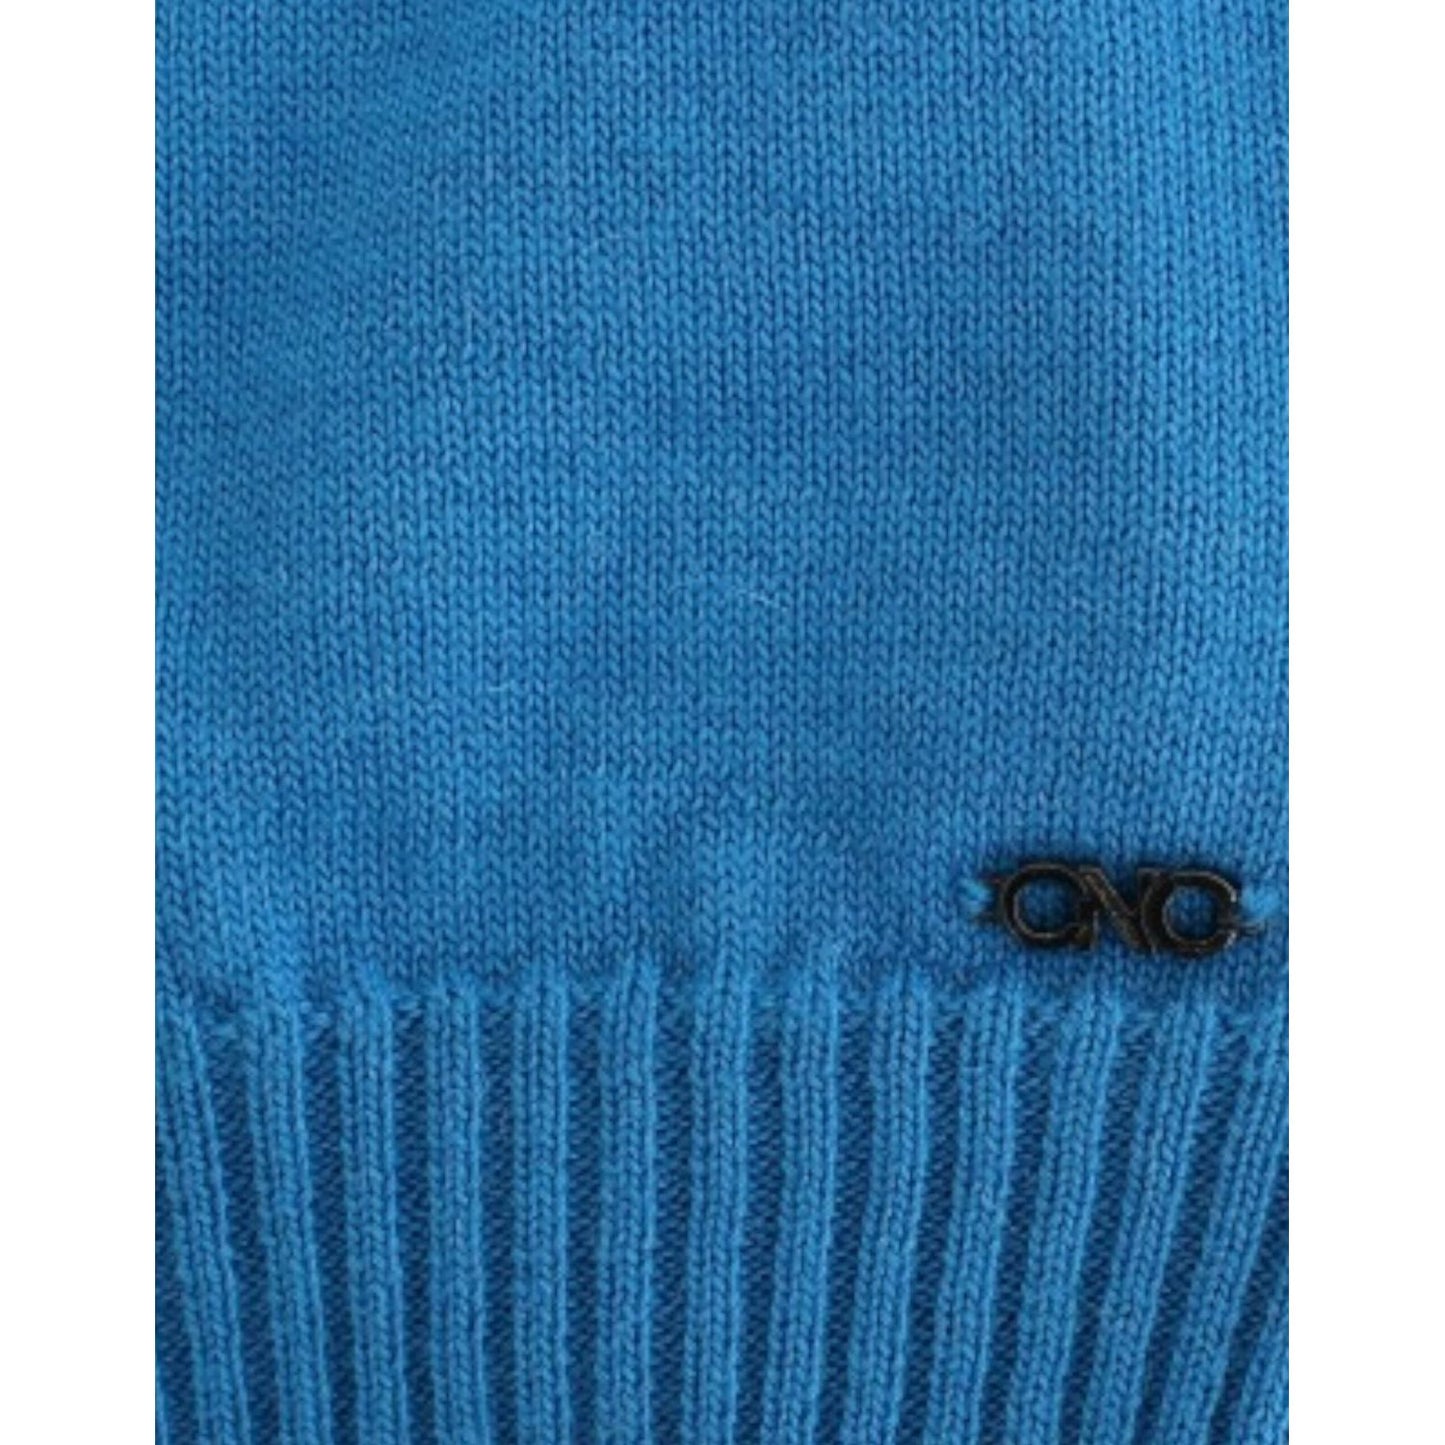 Costume National Cozy Scoop Neck Blue Knit Sweater blue-scoopneck-sweater